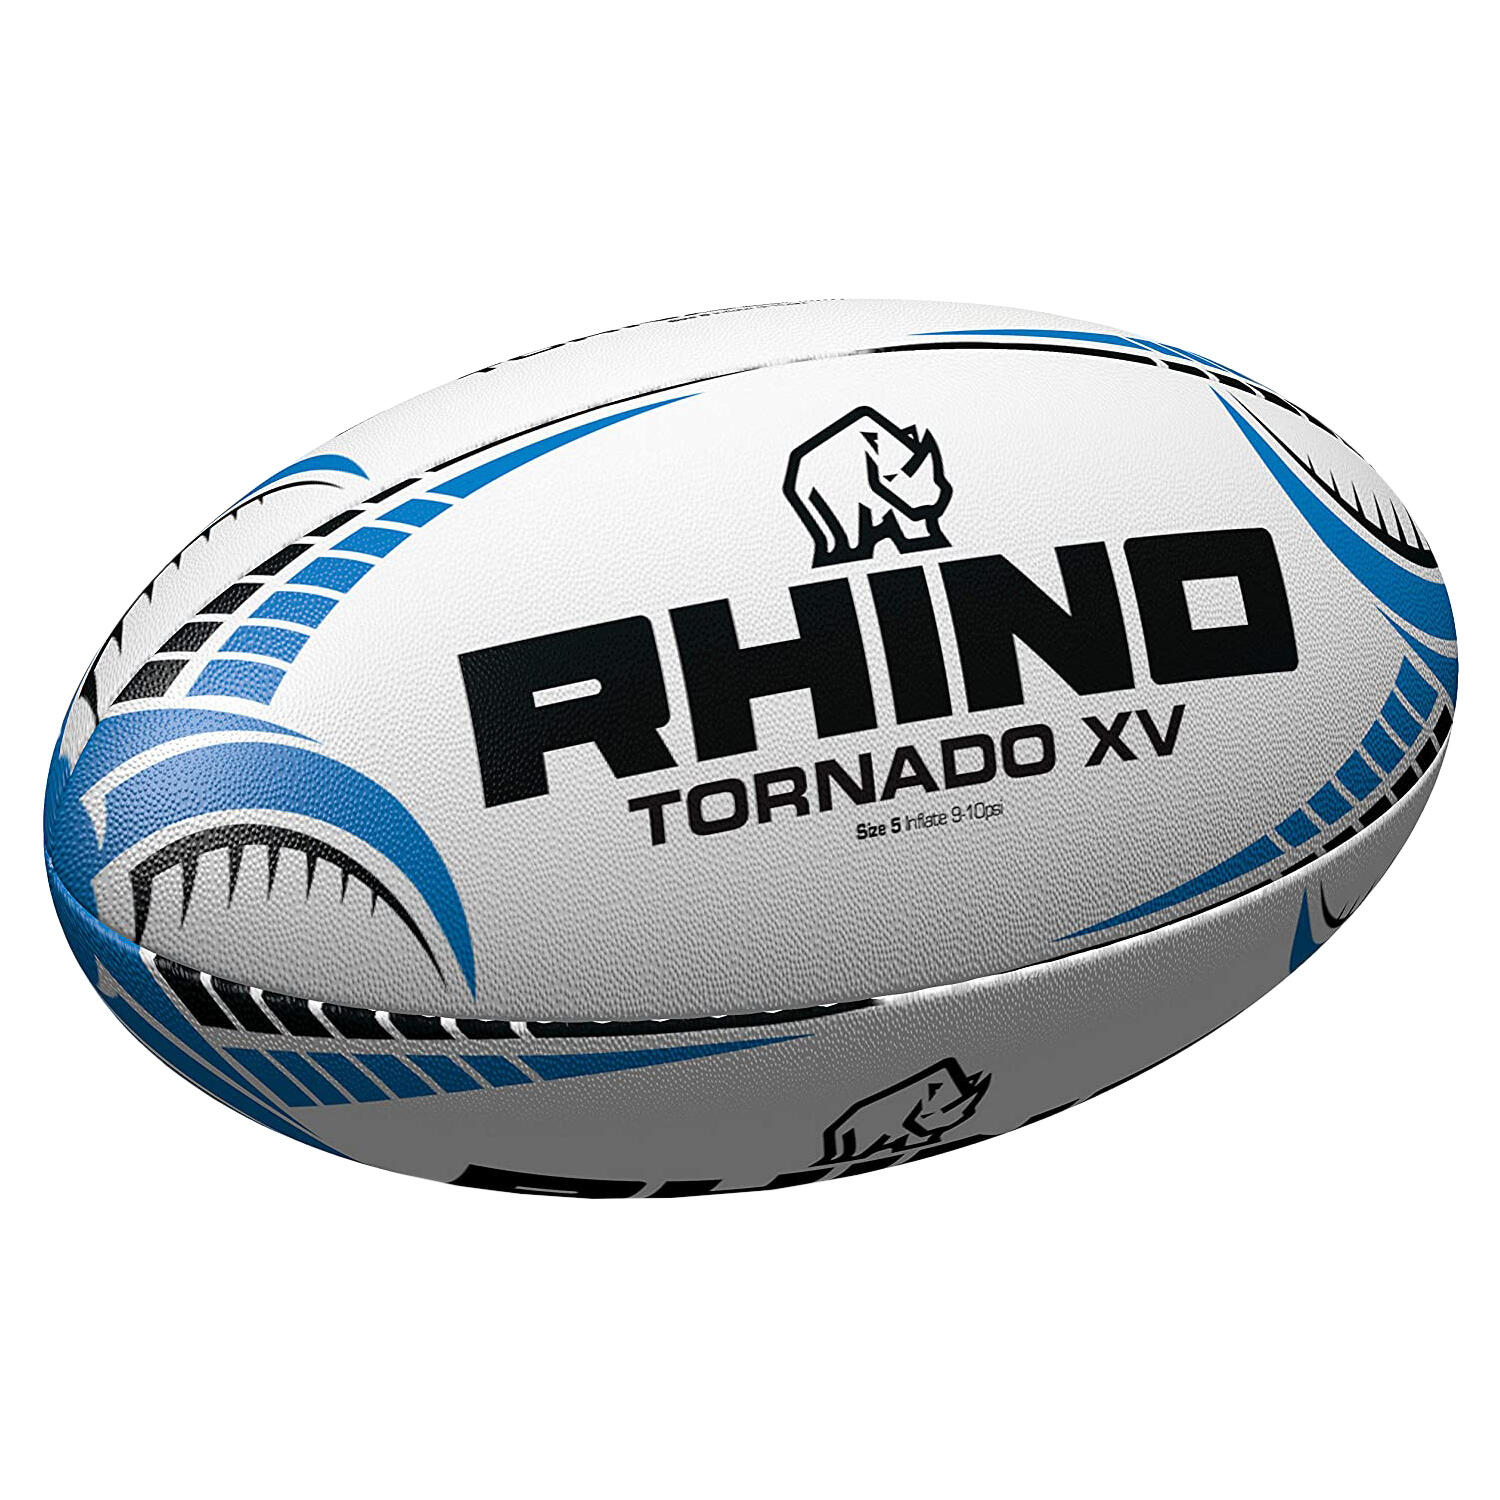 Tornado XV Rugby Ball (White/Blue/Black) 1/3